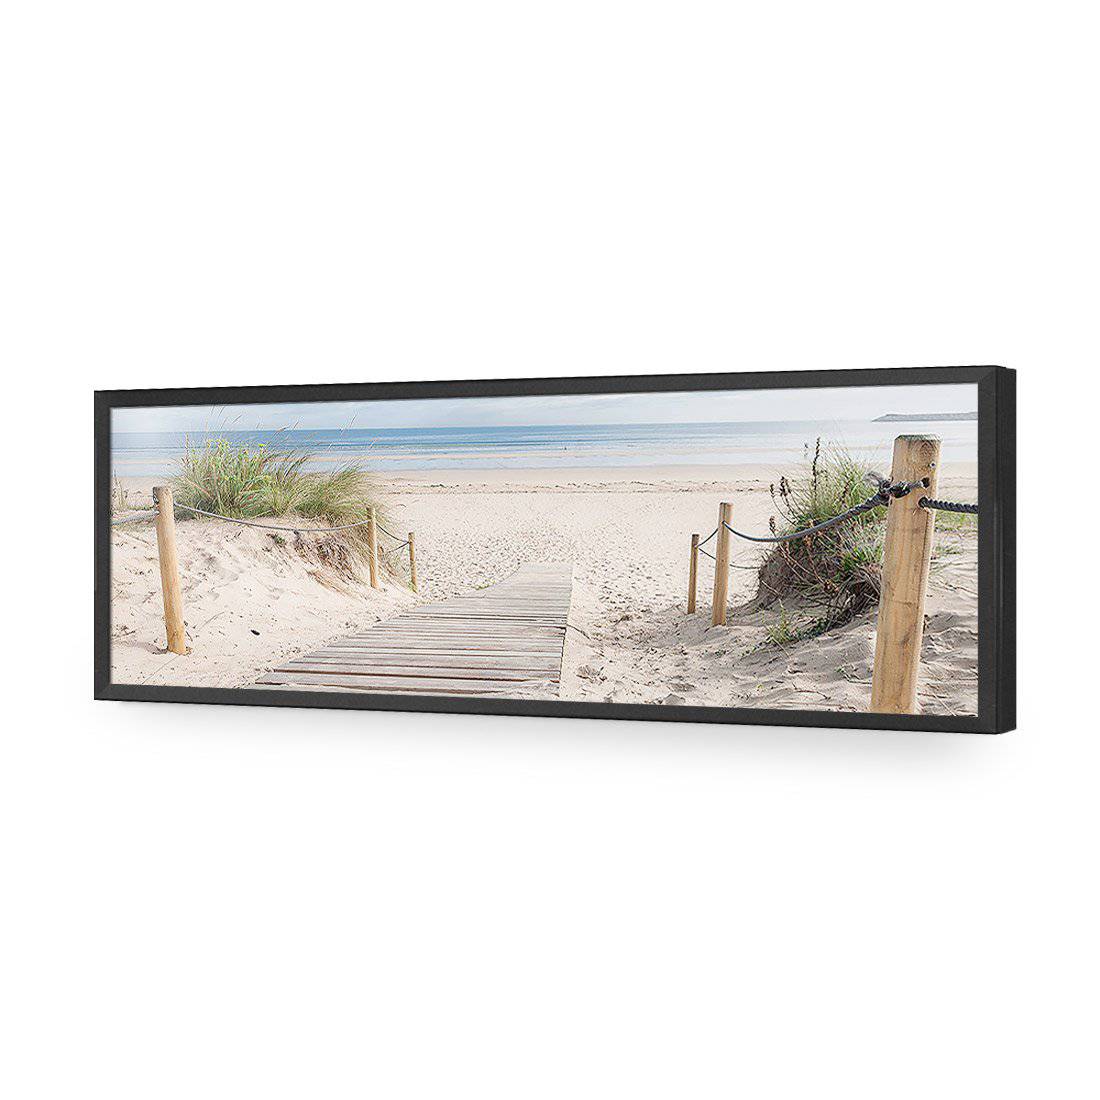 Beach Path, Long-Acrylic-Wall Art Design-Without Border-Acrylic - Black Frame-60x20cm-Wall Art Designs